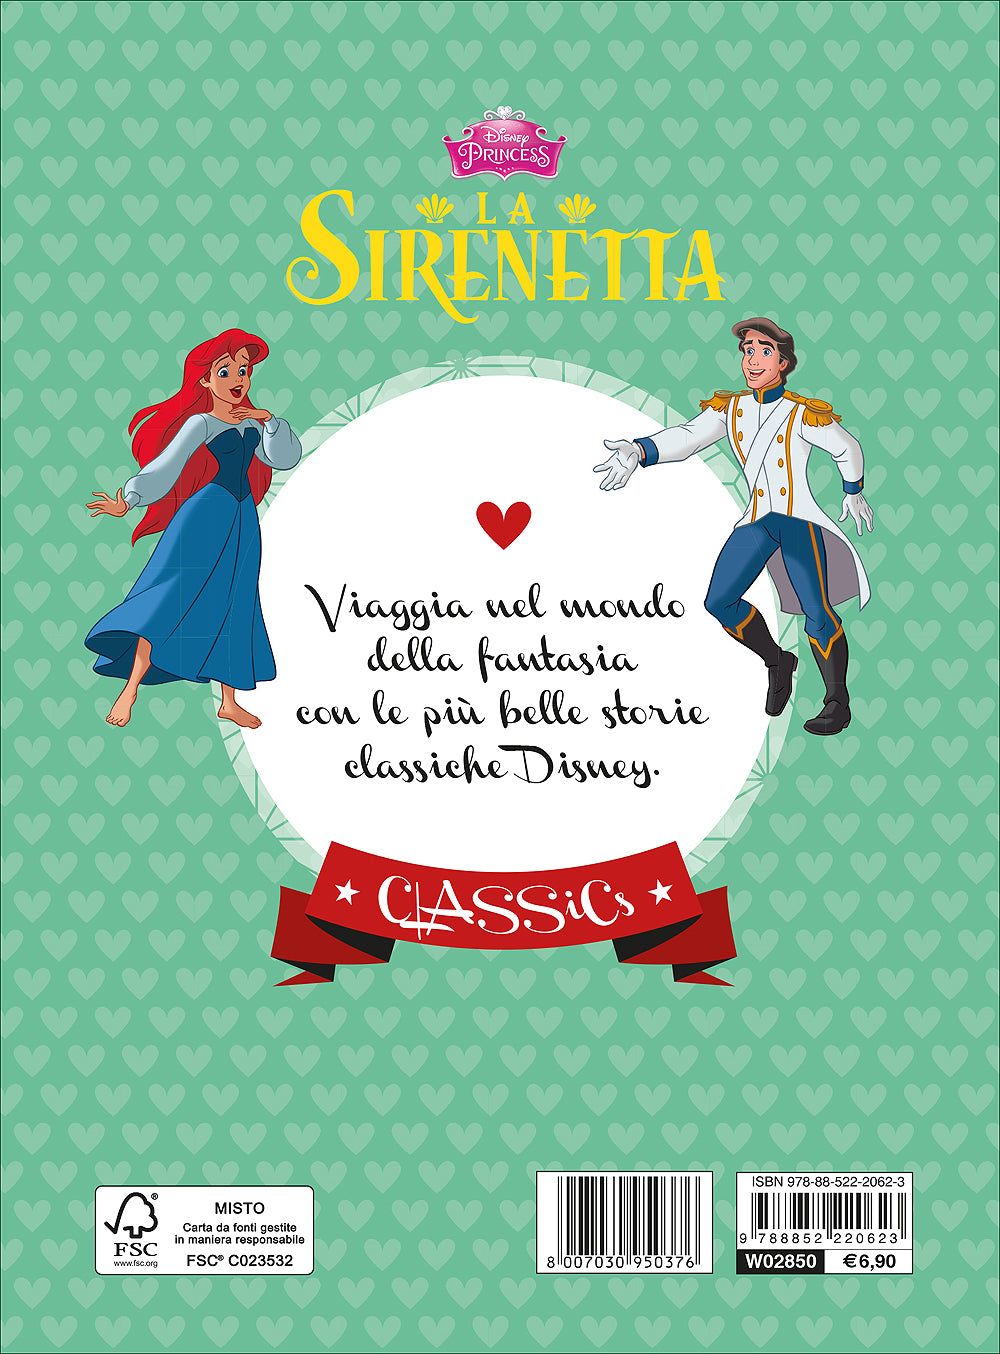 Classics - La Sirenetta